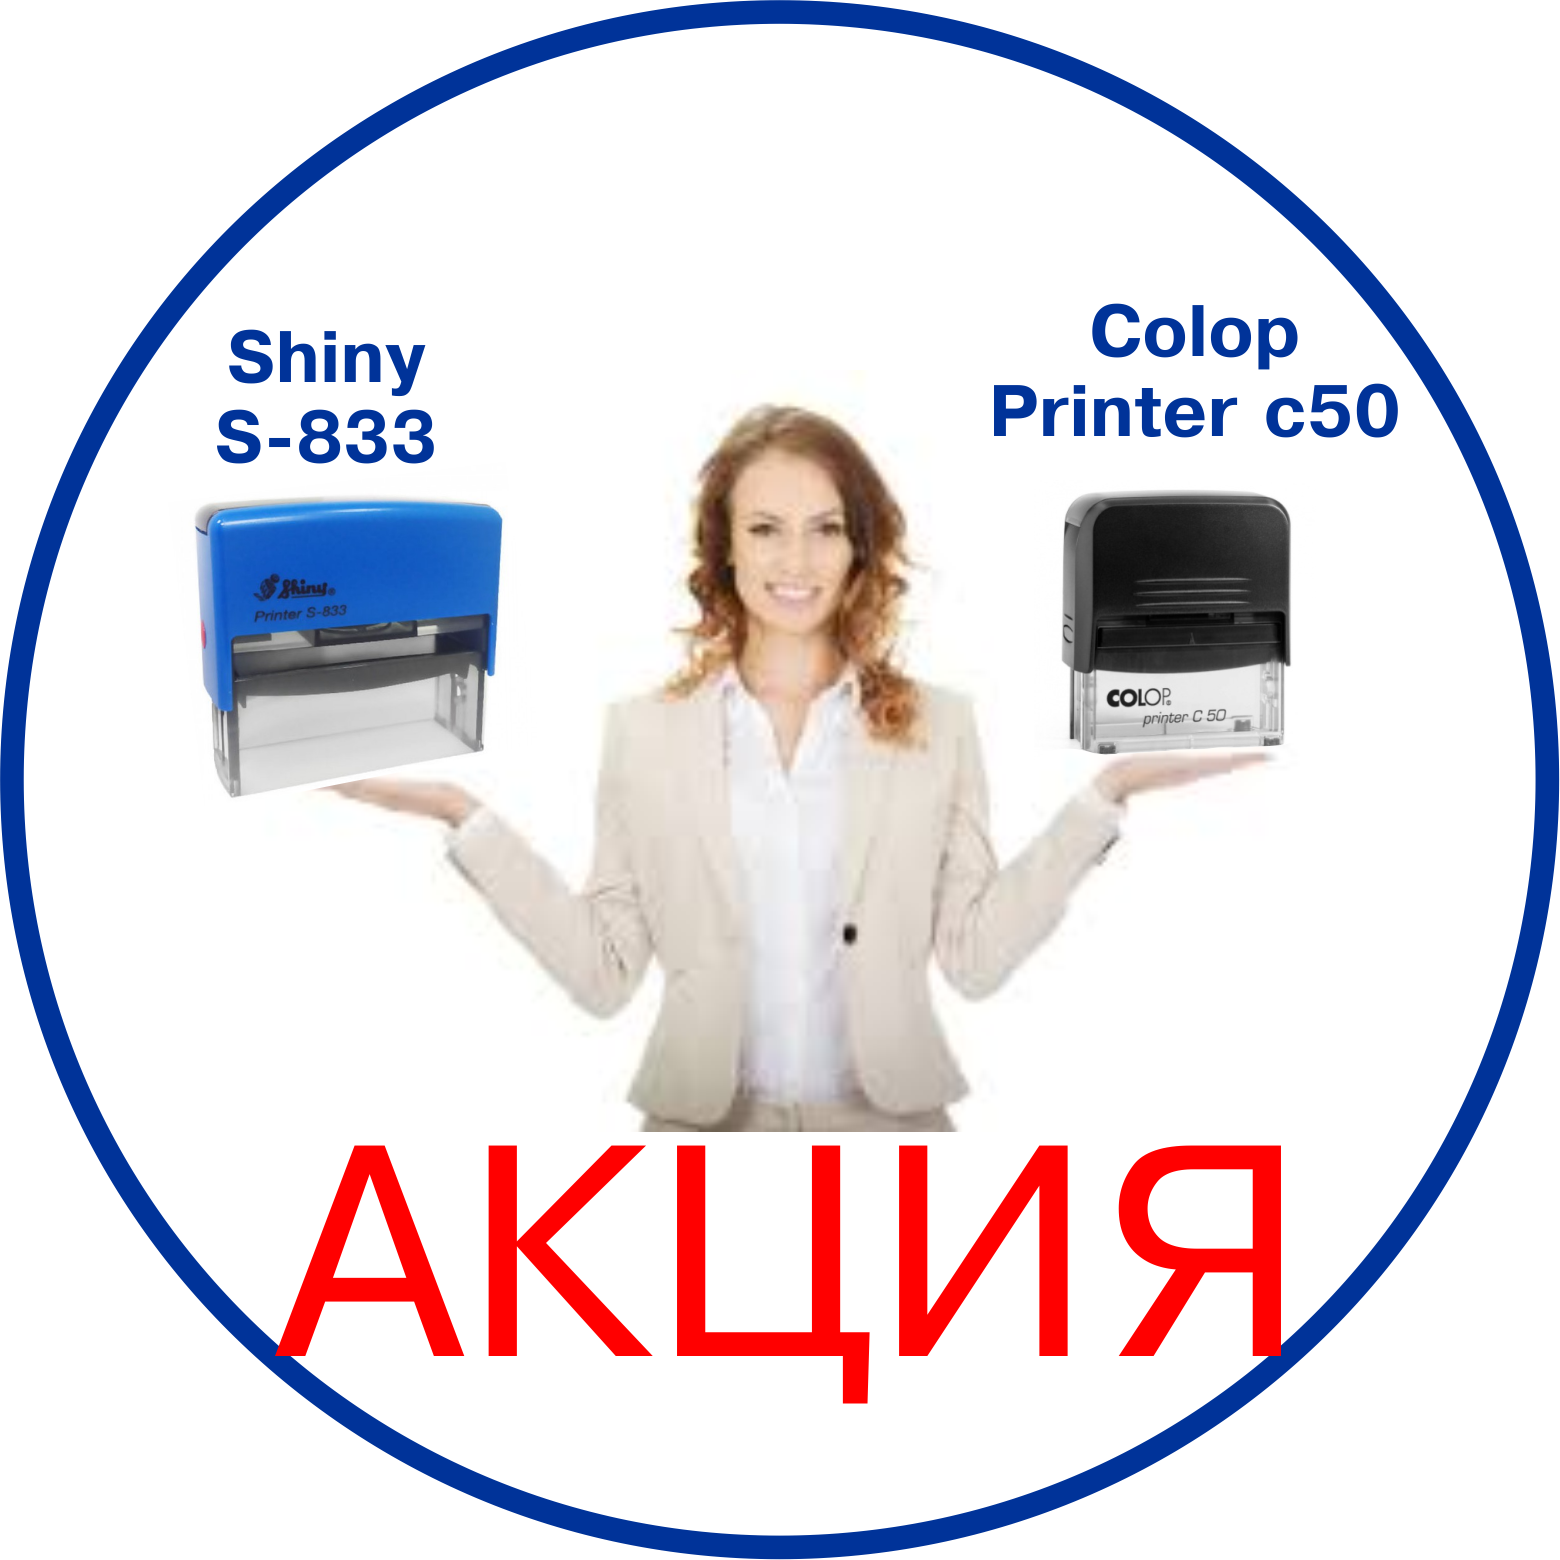 акция на Colop Printer c50 и Shiny S-833